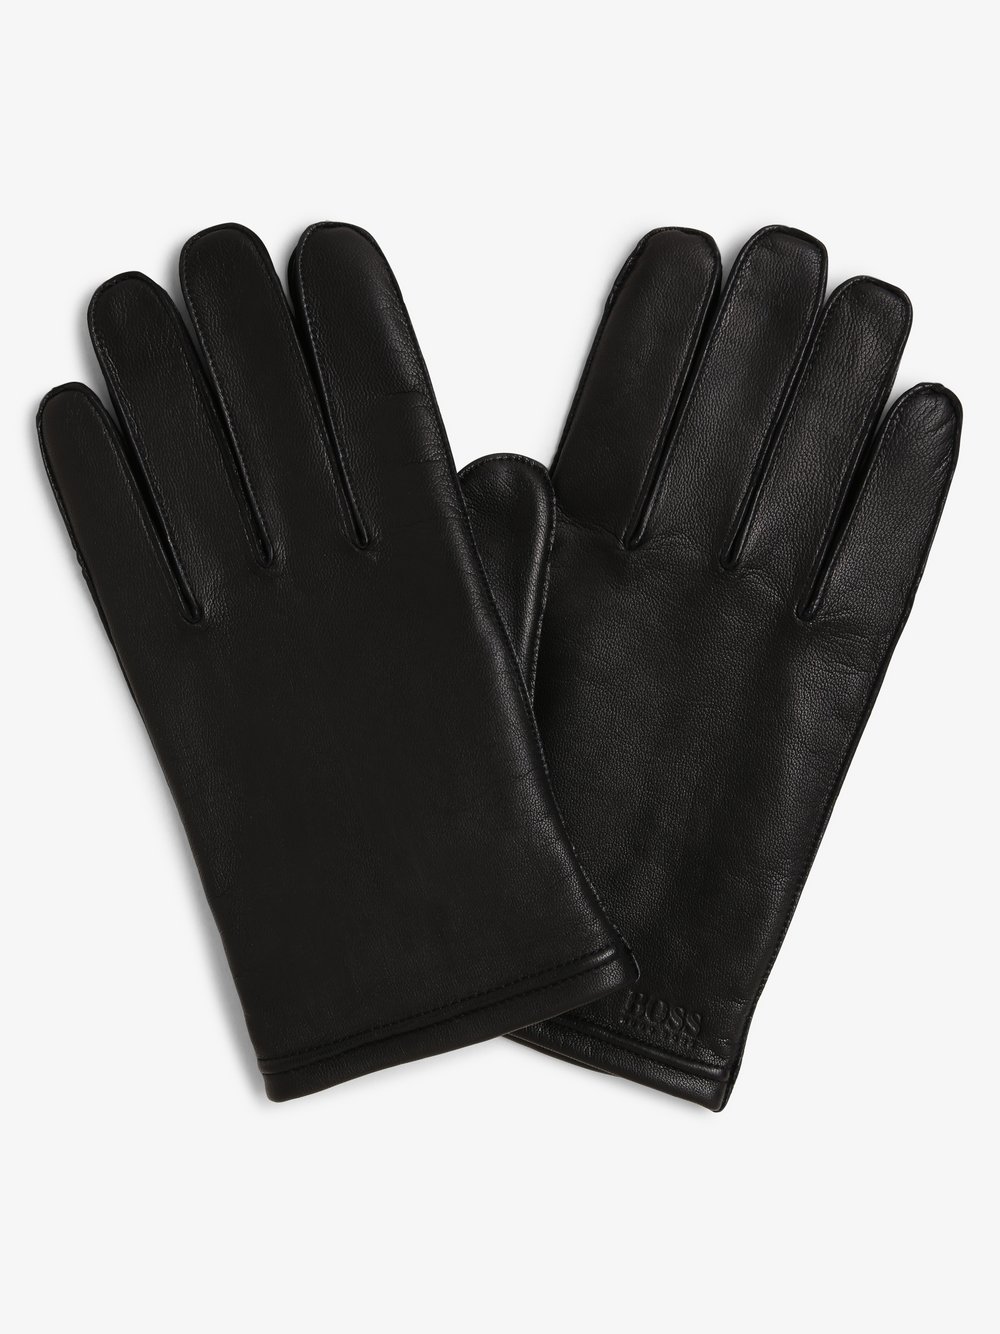 BOSS - Skórzane rękawiczki męskie – Kranton5-TT, czarny